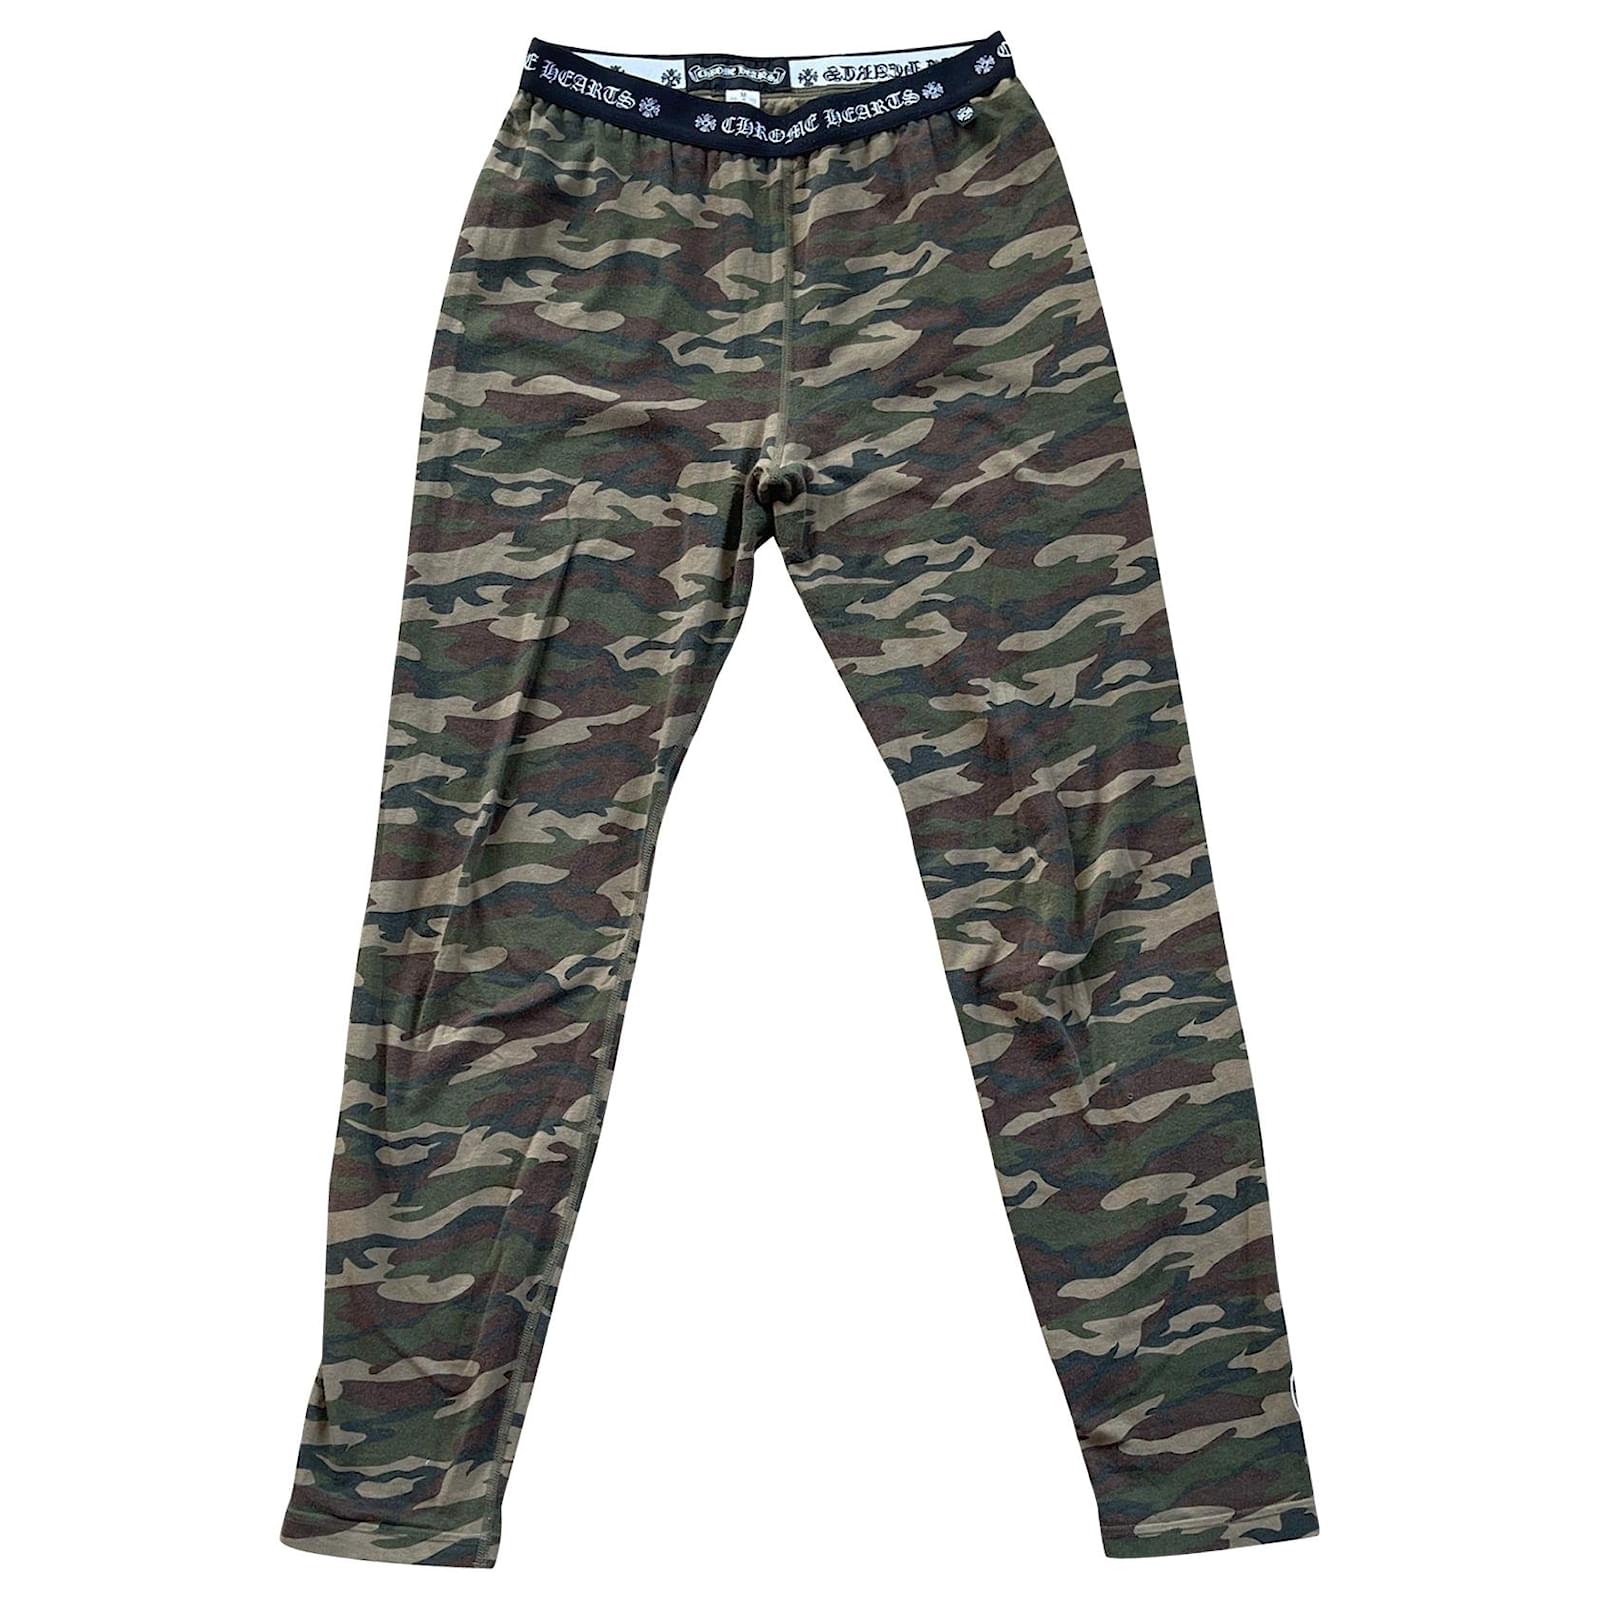 https://cdn1.jolicloset.com/imgr/full/2023/11/1057563-1/green-polyester-chrome-hearts-camouflage-leggings-tights-pants-shorts.jpg